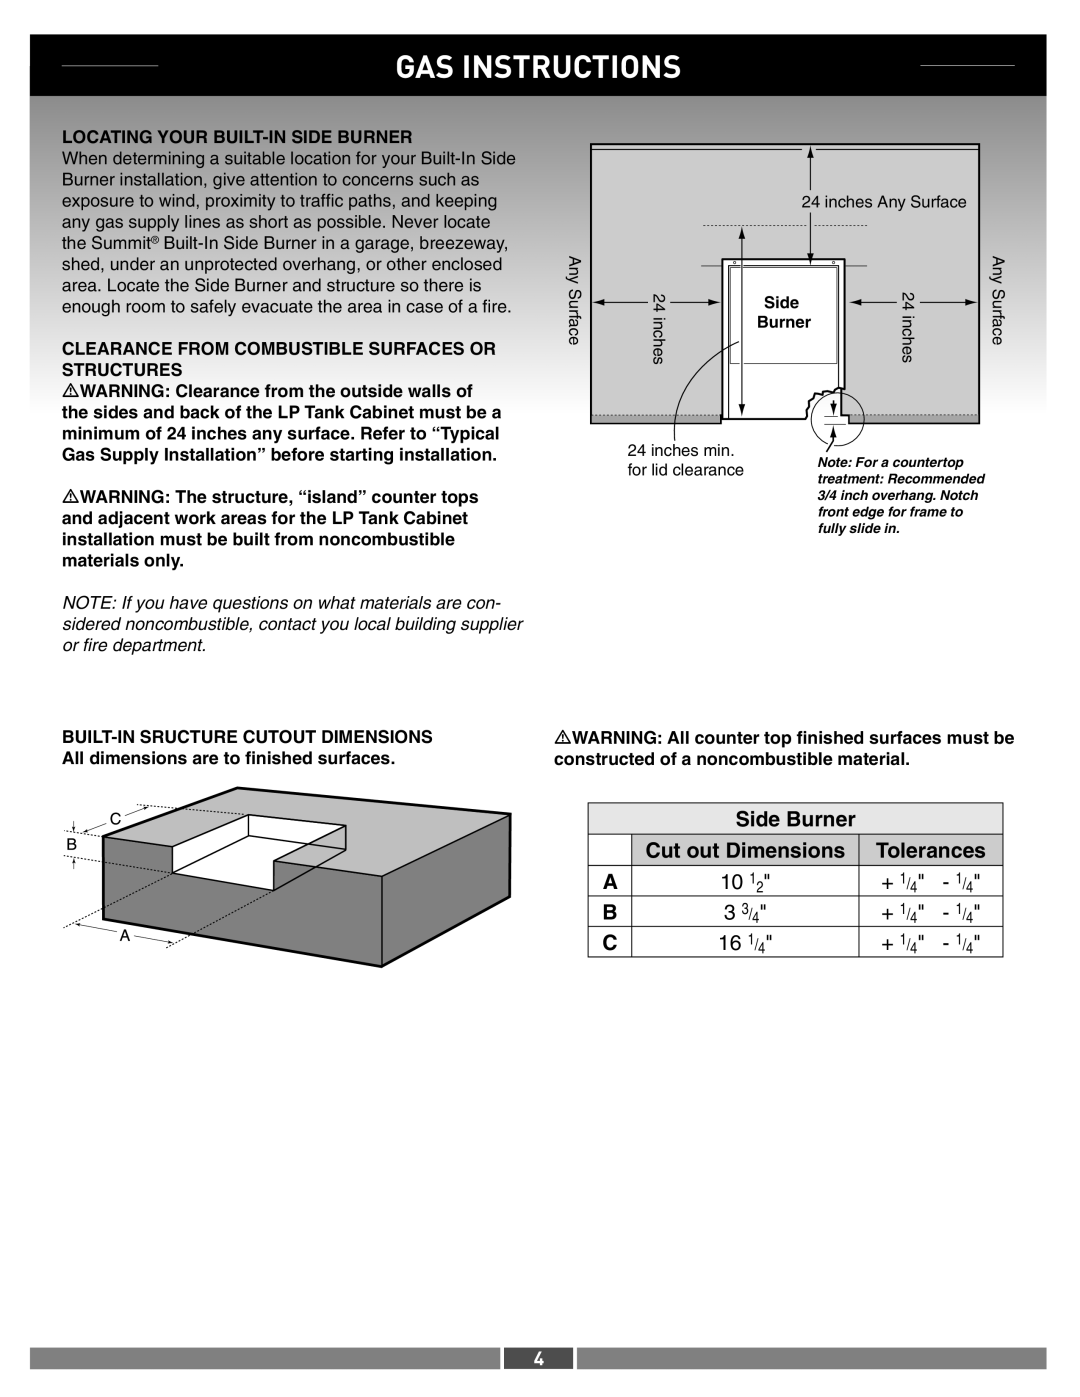 Weber 42377 manual Gas Instructions, Side Burner, Cut out Dimensions, Tolerances, + 1/4 - 1/4, 3 3/4, 16 1/4 